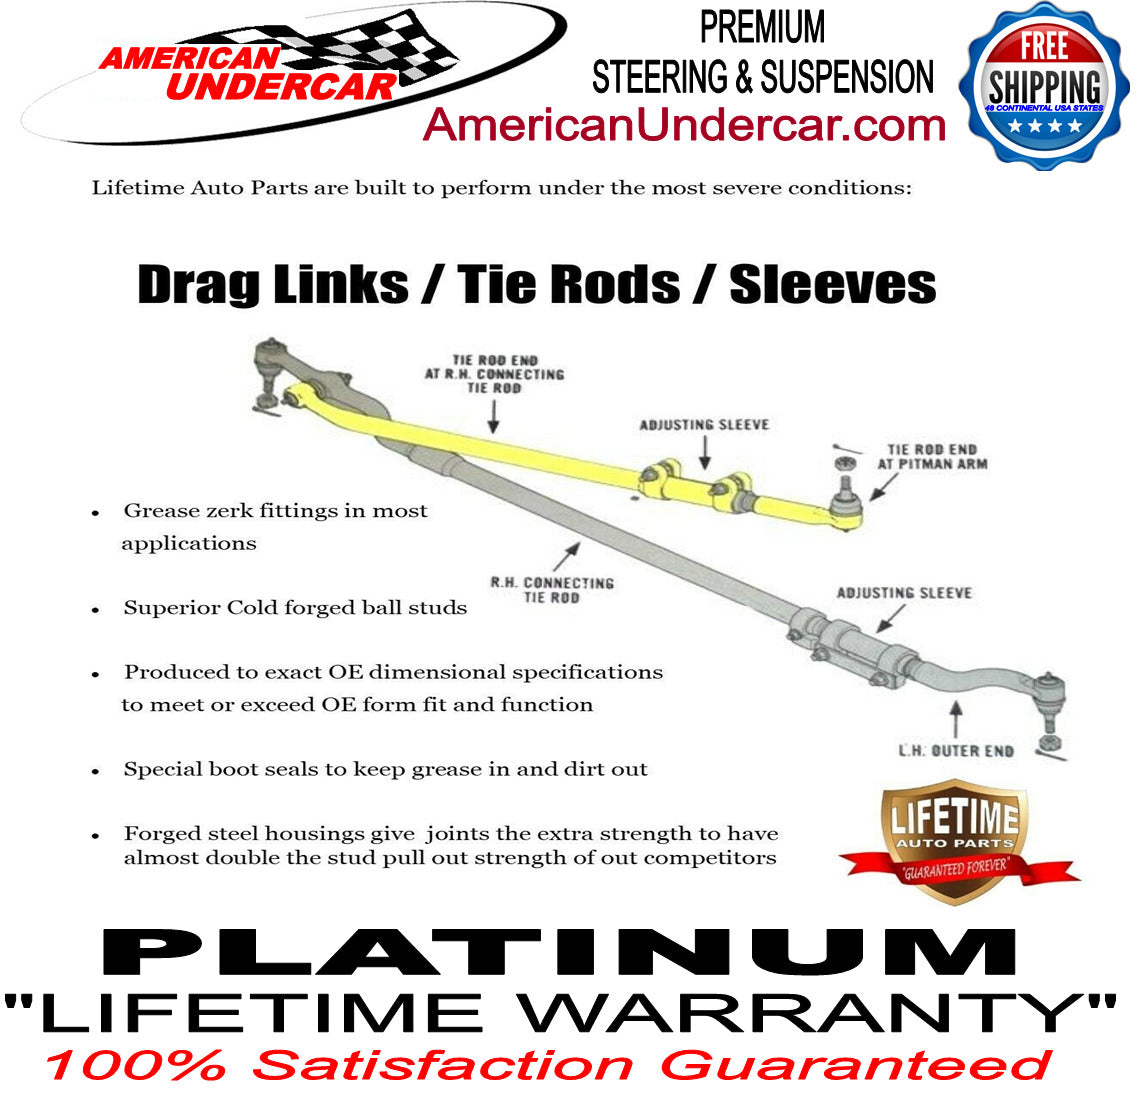 Lifetime Drag Link Tie Rod Sleeve Steering Kit for 1999-2004 Ford F450, F550 Super Duty